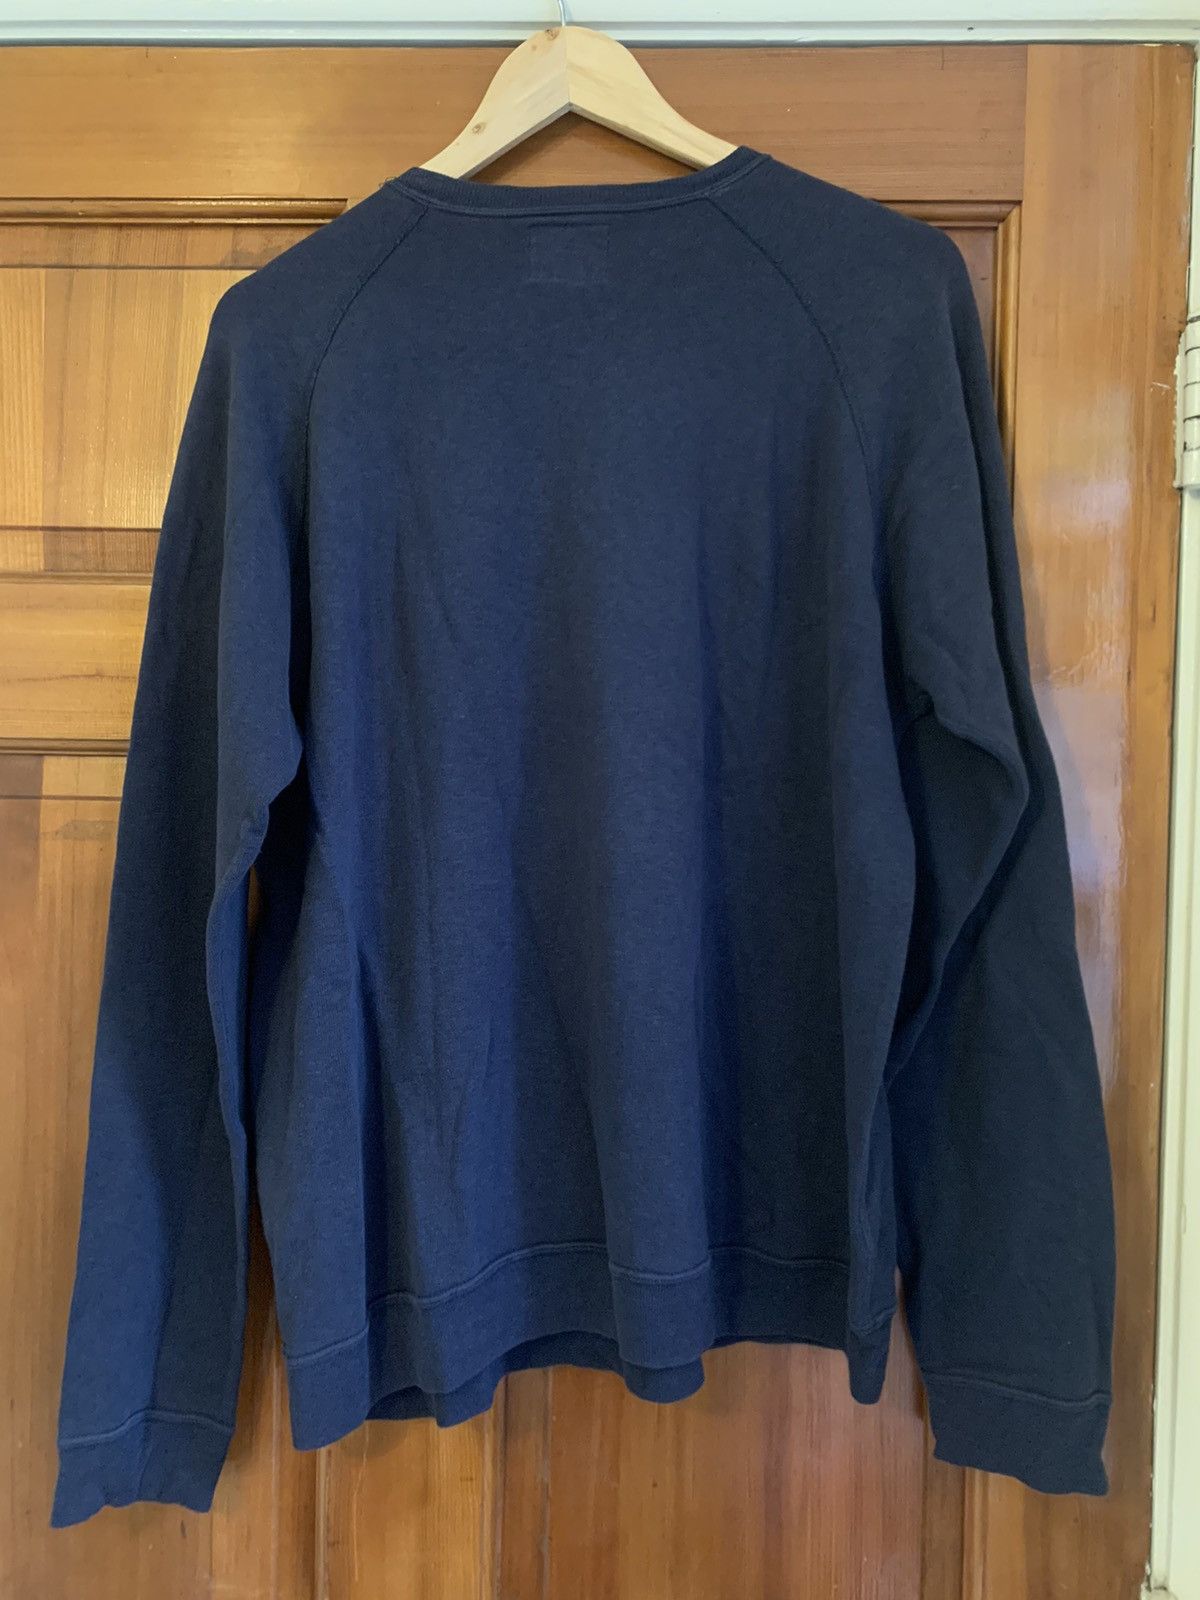 Bape Ursus Bape U.S.S Japanese Made Crewneck Sweatshirt -L Size US L / EU 52-54 / 3 - 2 Preview